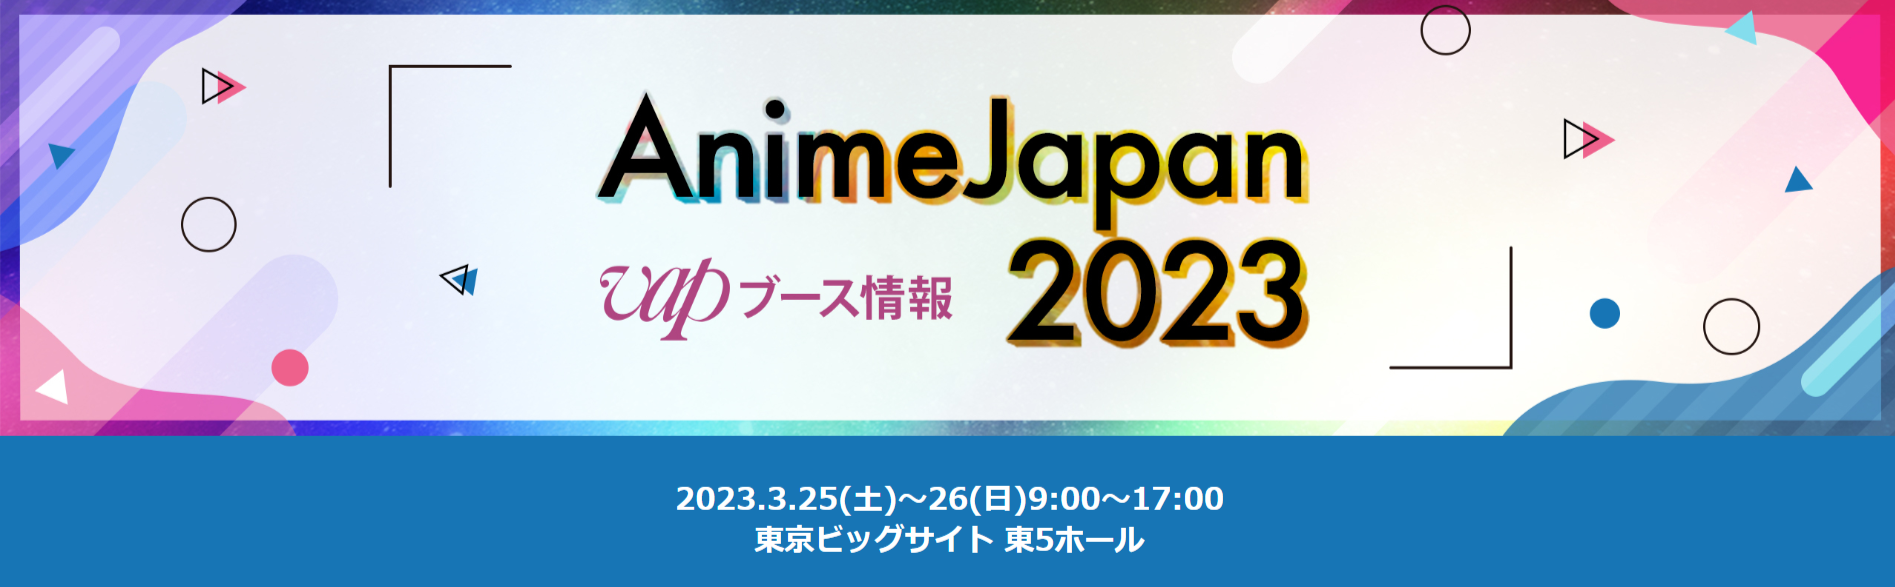 AnimeJapan 2023 vapブース情報 バナー